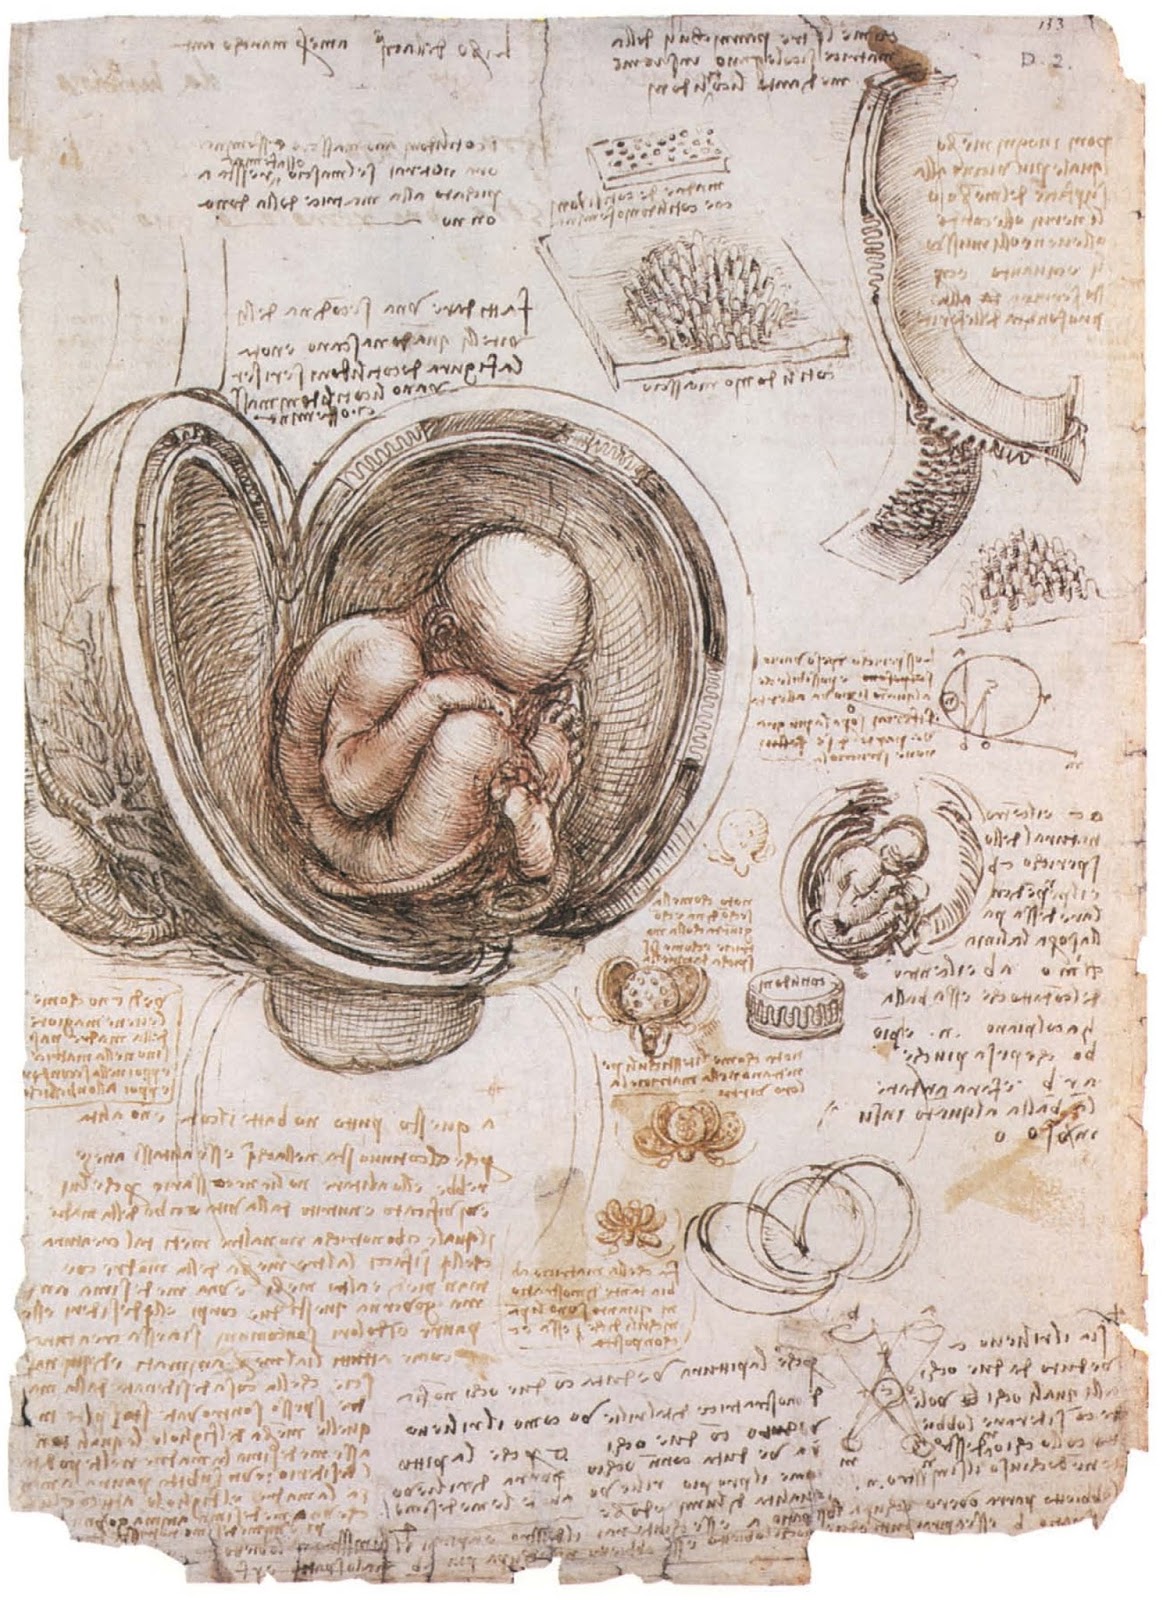 Leonardo+da+Vinci-1452-1519 (738).jpg